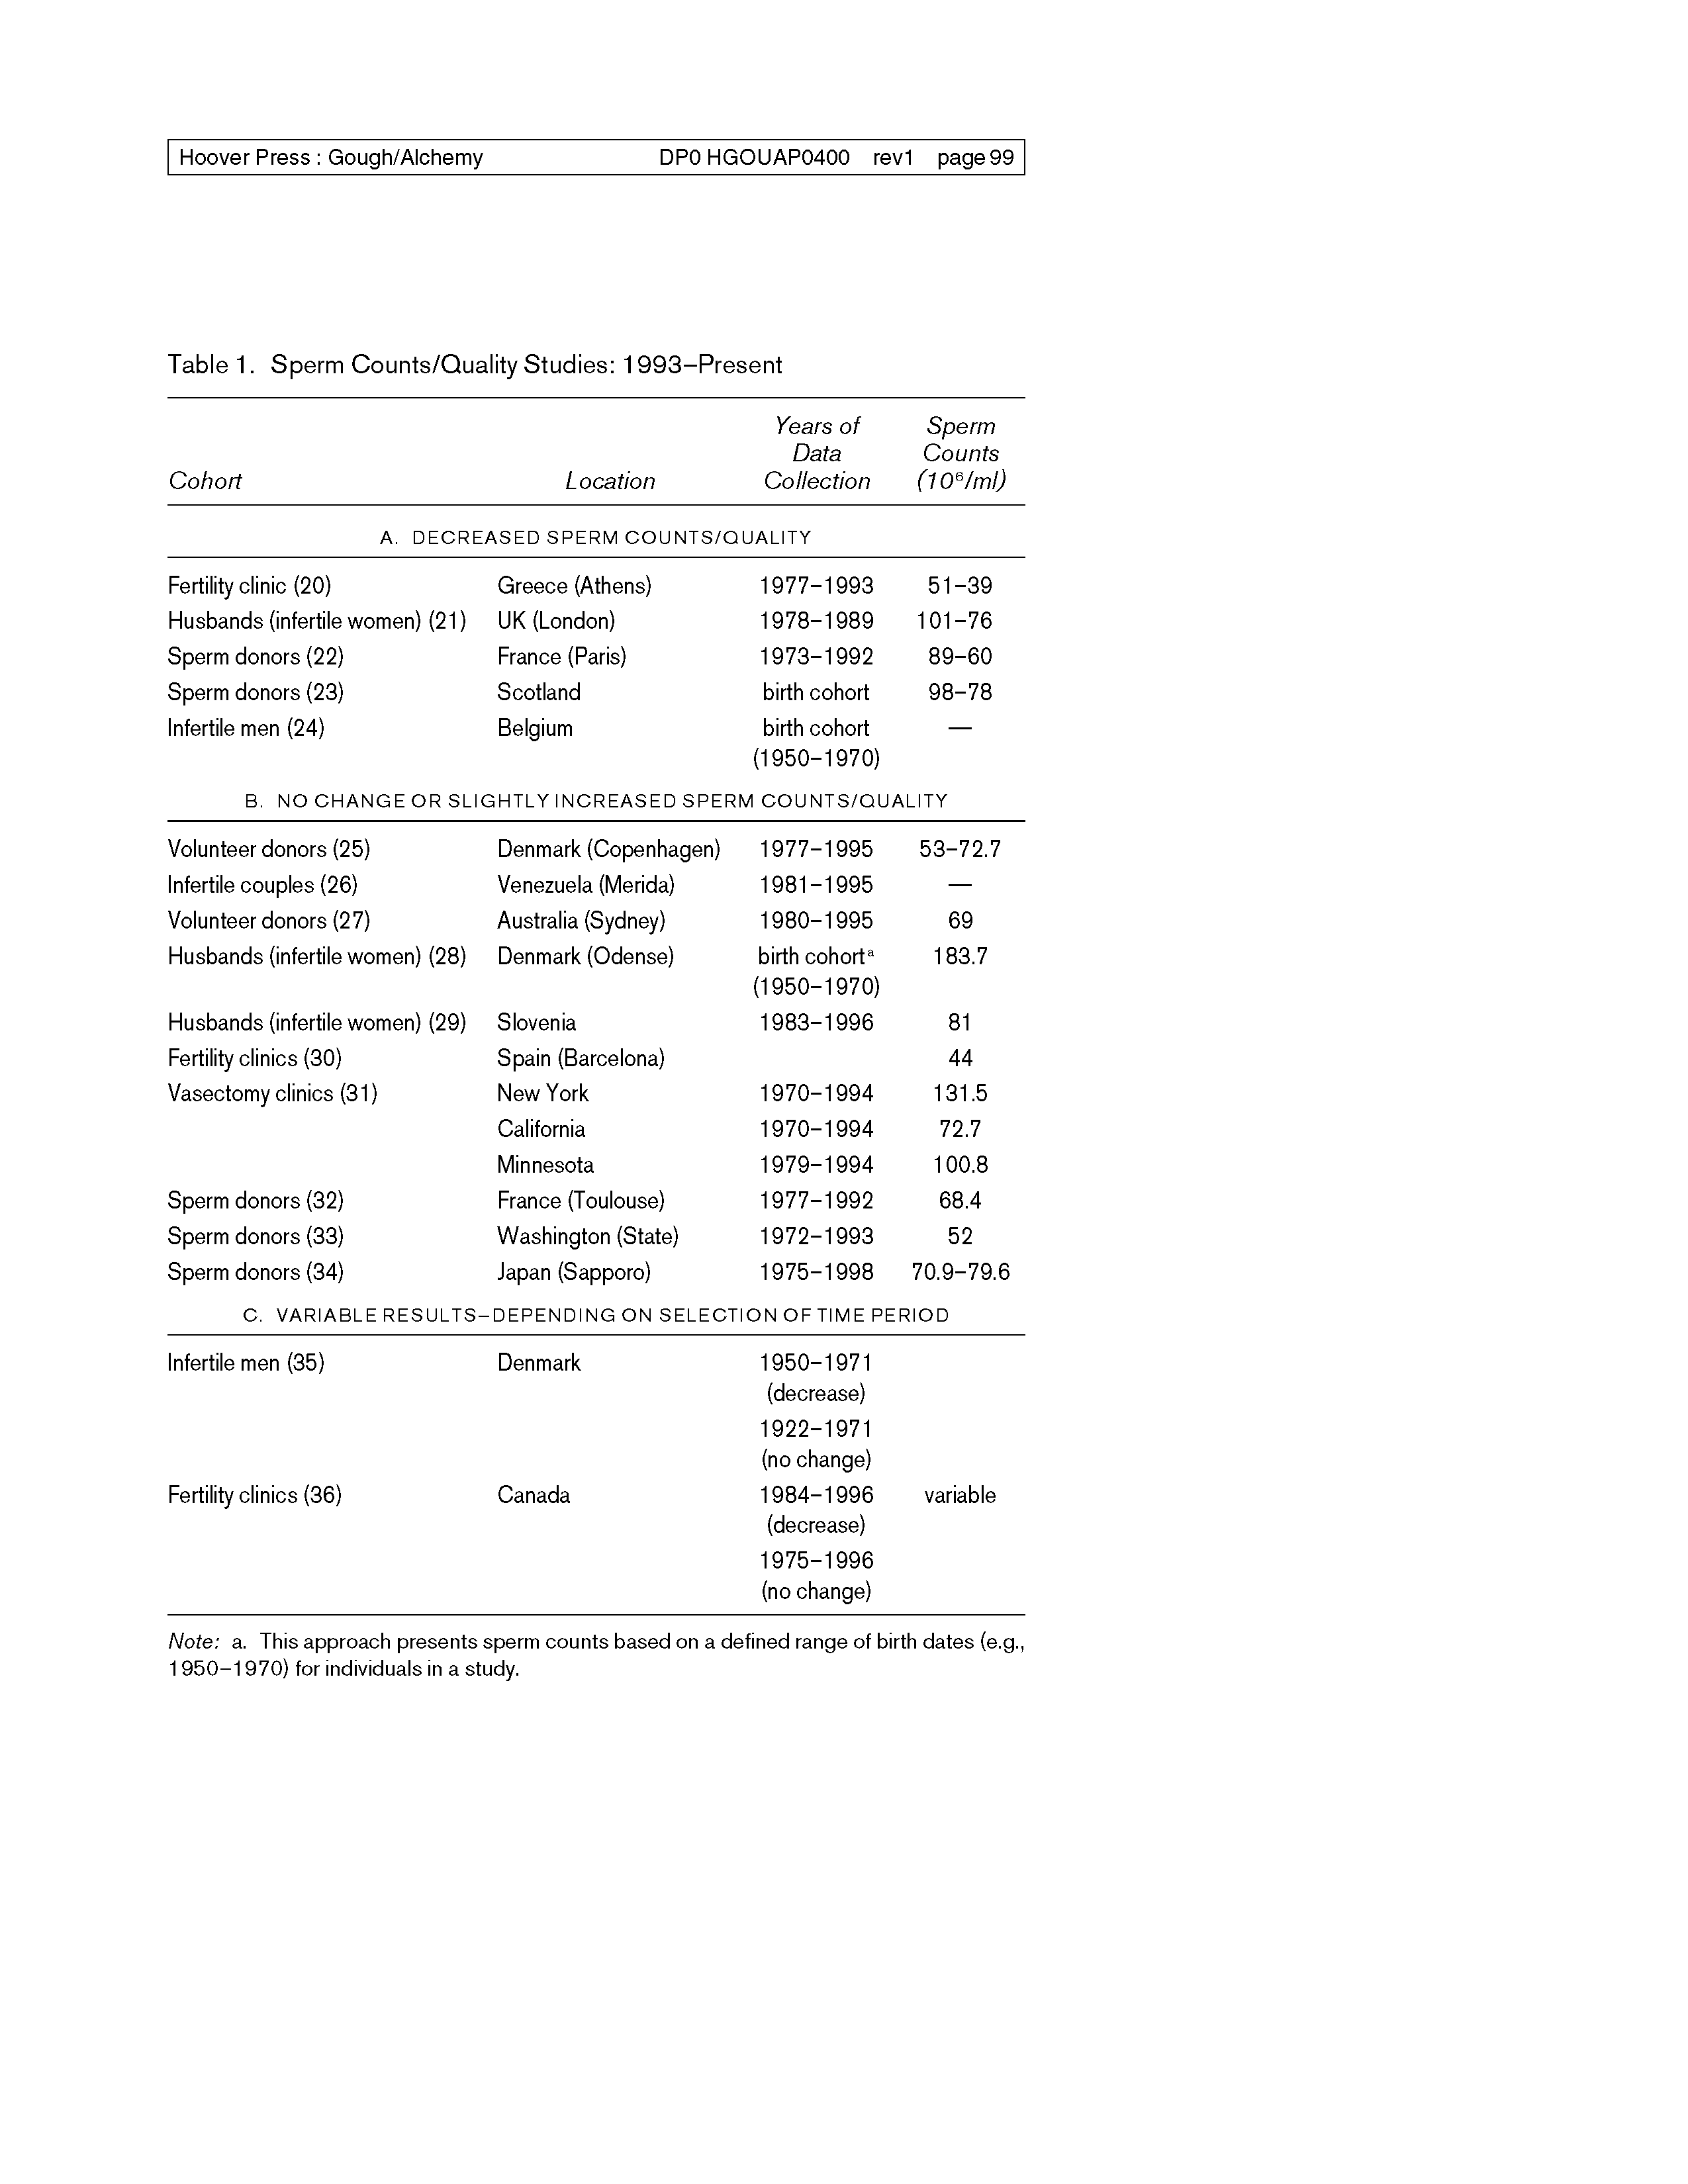 Table 1. Sperm Counts/Quality Studies 1993-Present...